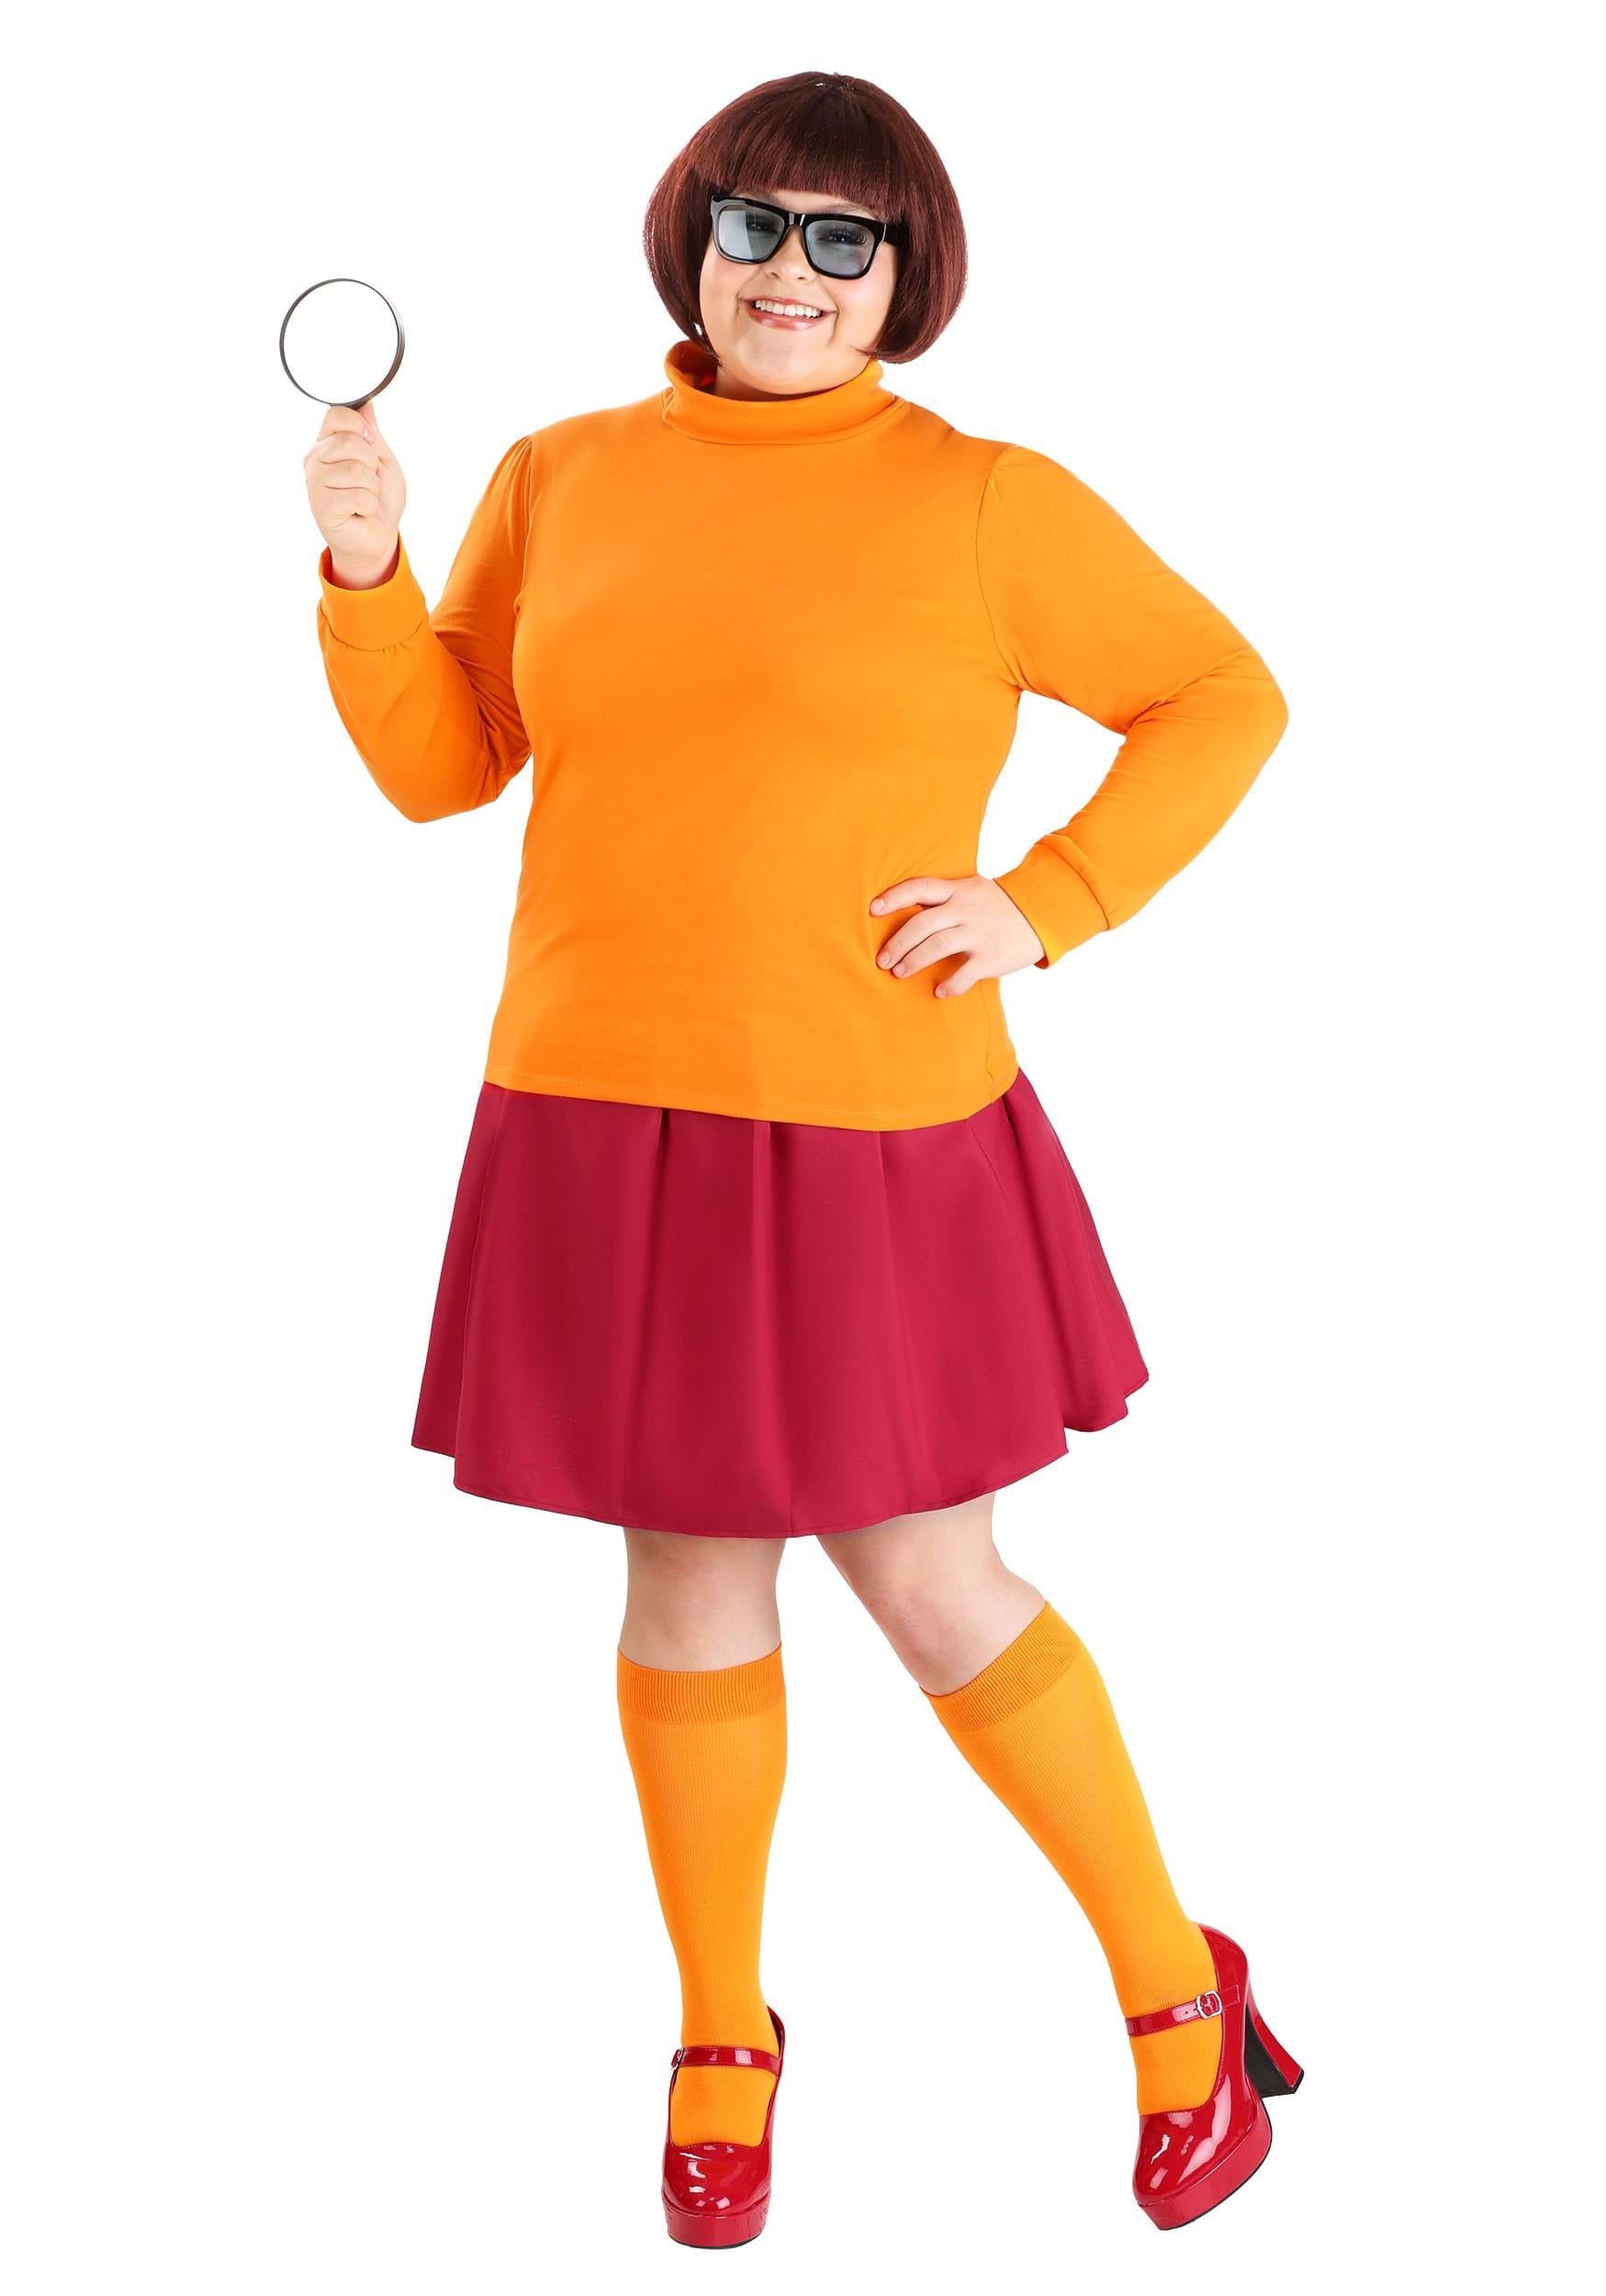 Velma and scooby doo costumes